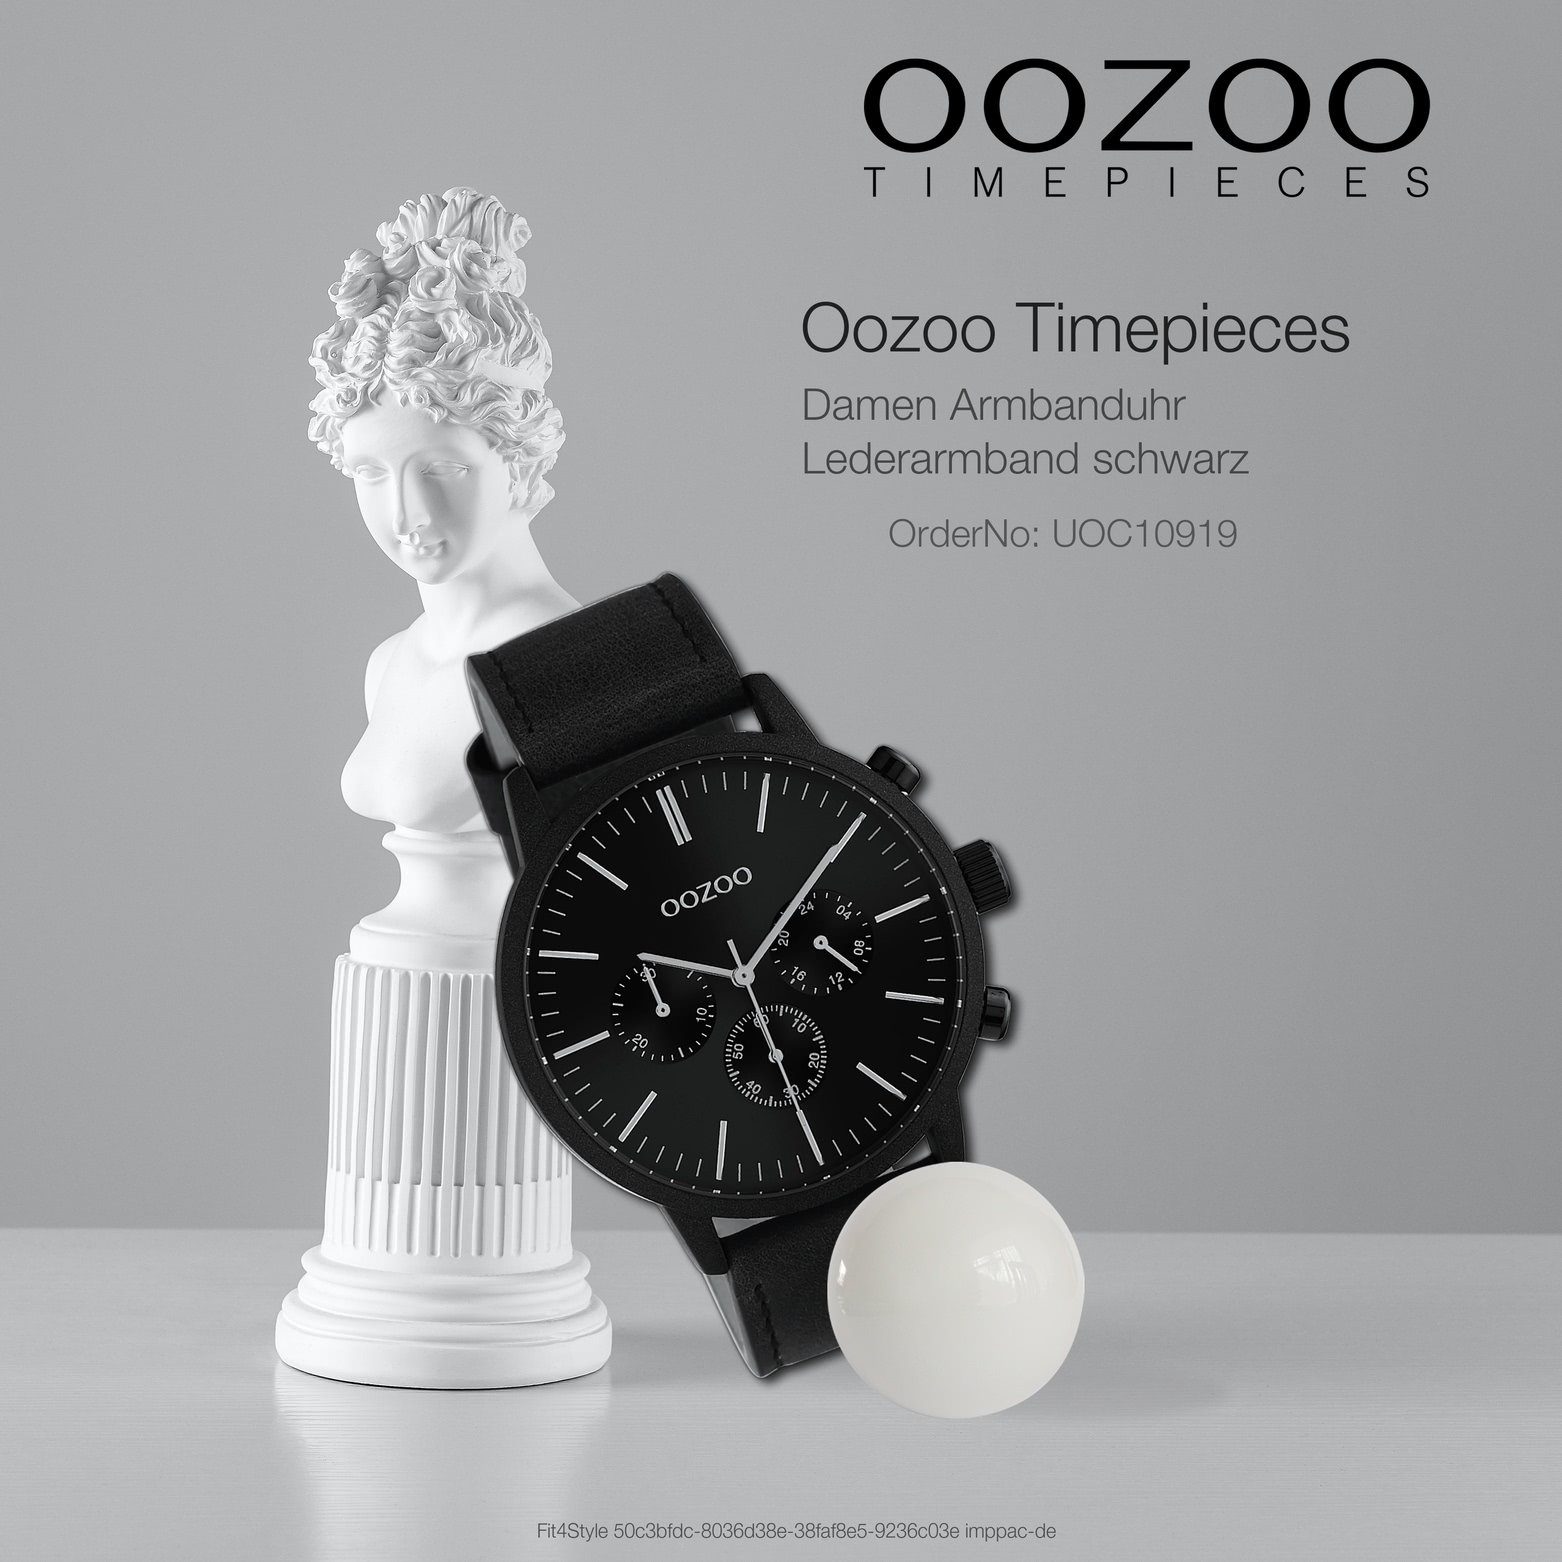 (ca. schwarz Analog, 45mm) OOZOO Quarzuhr Lederarmband, Damen, Oozoo Herrenuhr Unisex groß Armbanduhr Casual-Style rund,